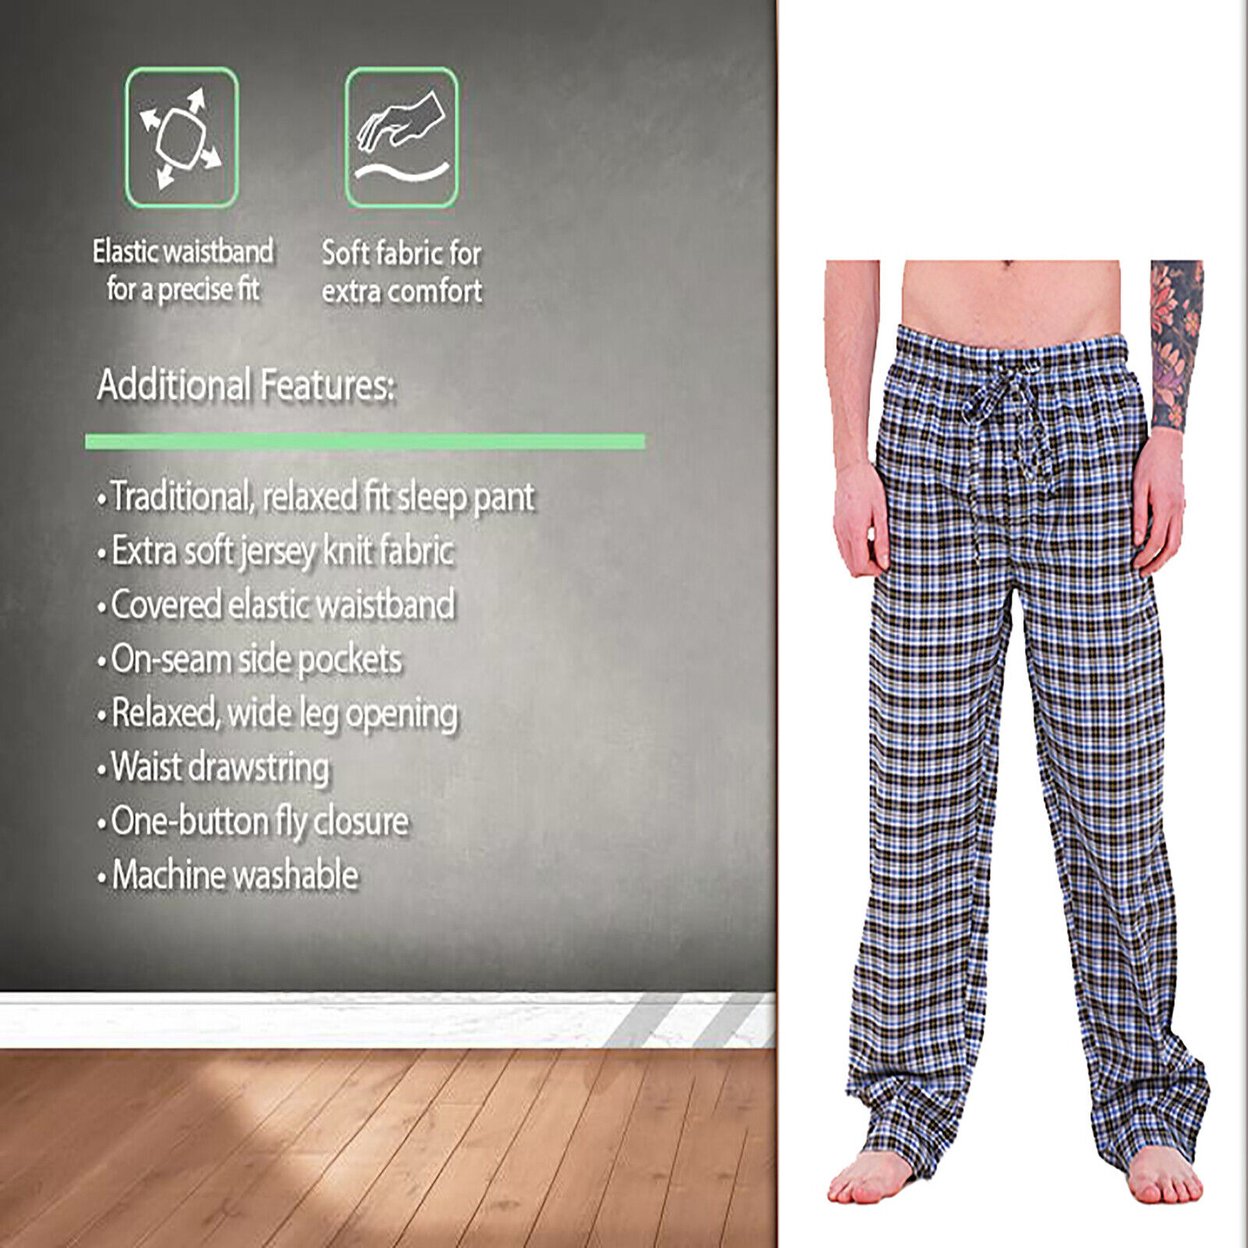 4-Pack: Men's Ultra-Soft Plaid Cotton Jersey Knit Comfy Sleep Lounge Pajama Pants - X-large